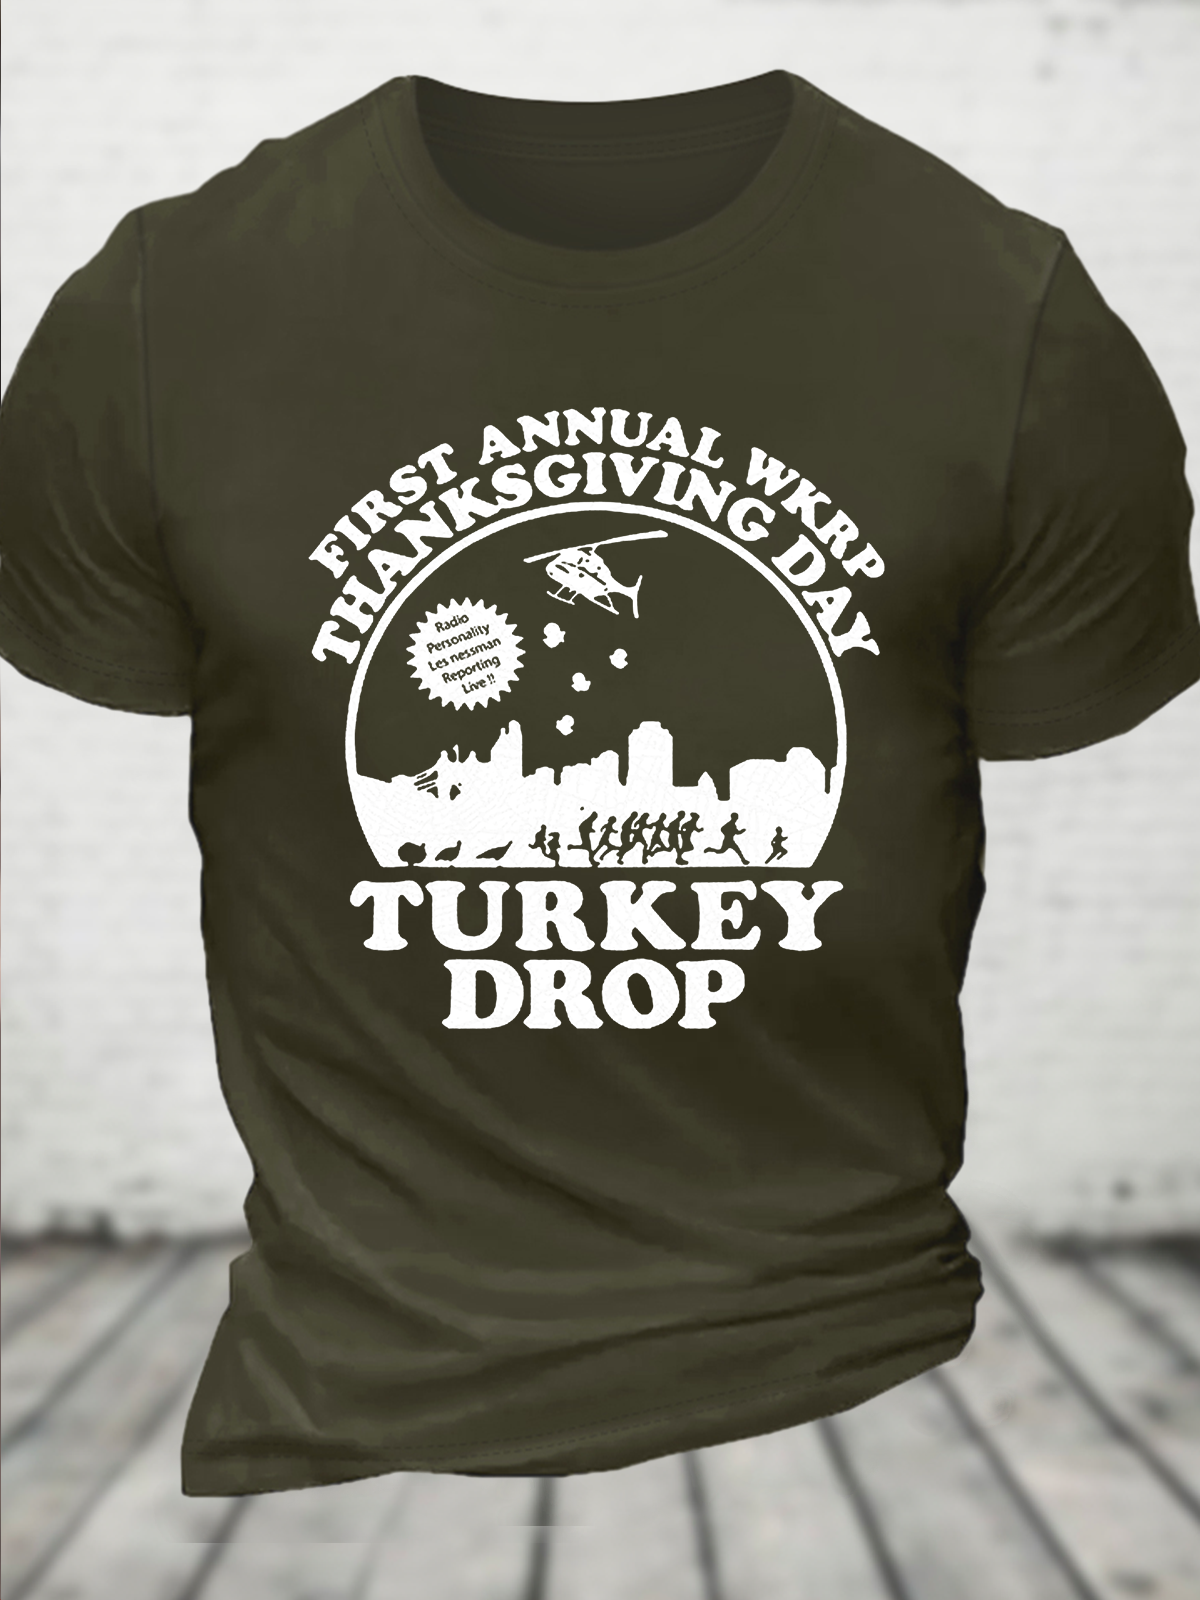 Cotton WKRP Turkeys Away Casual Crew Neck T-Shirt